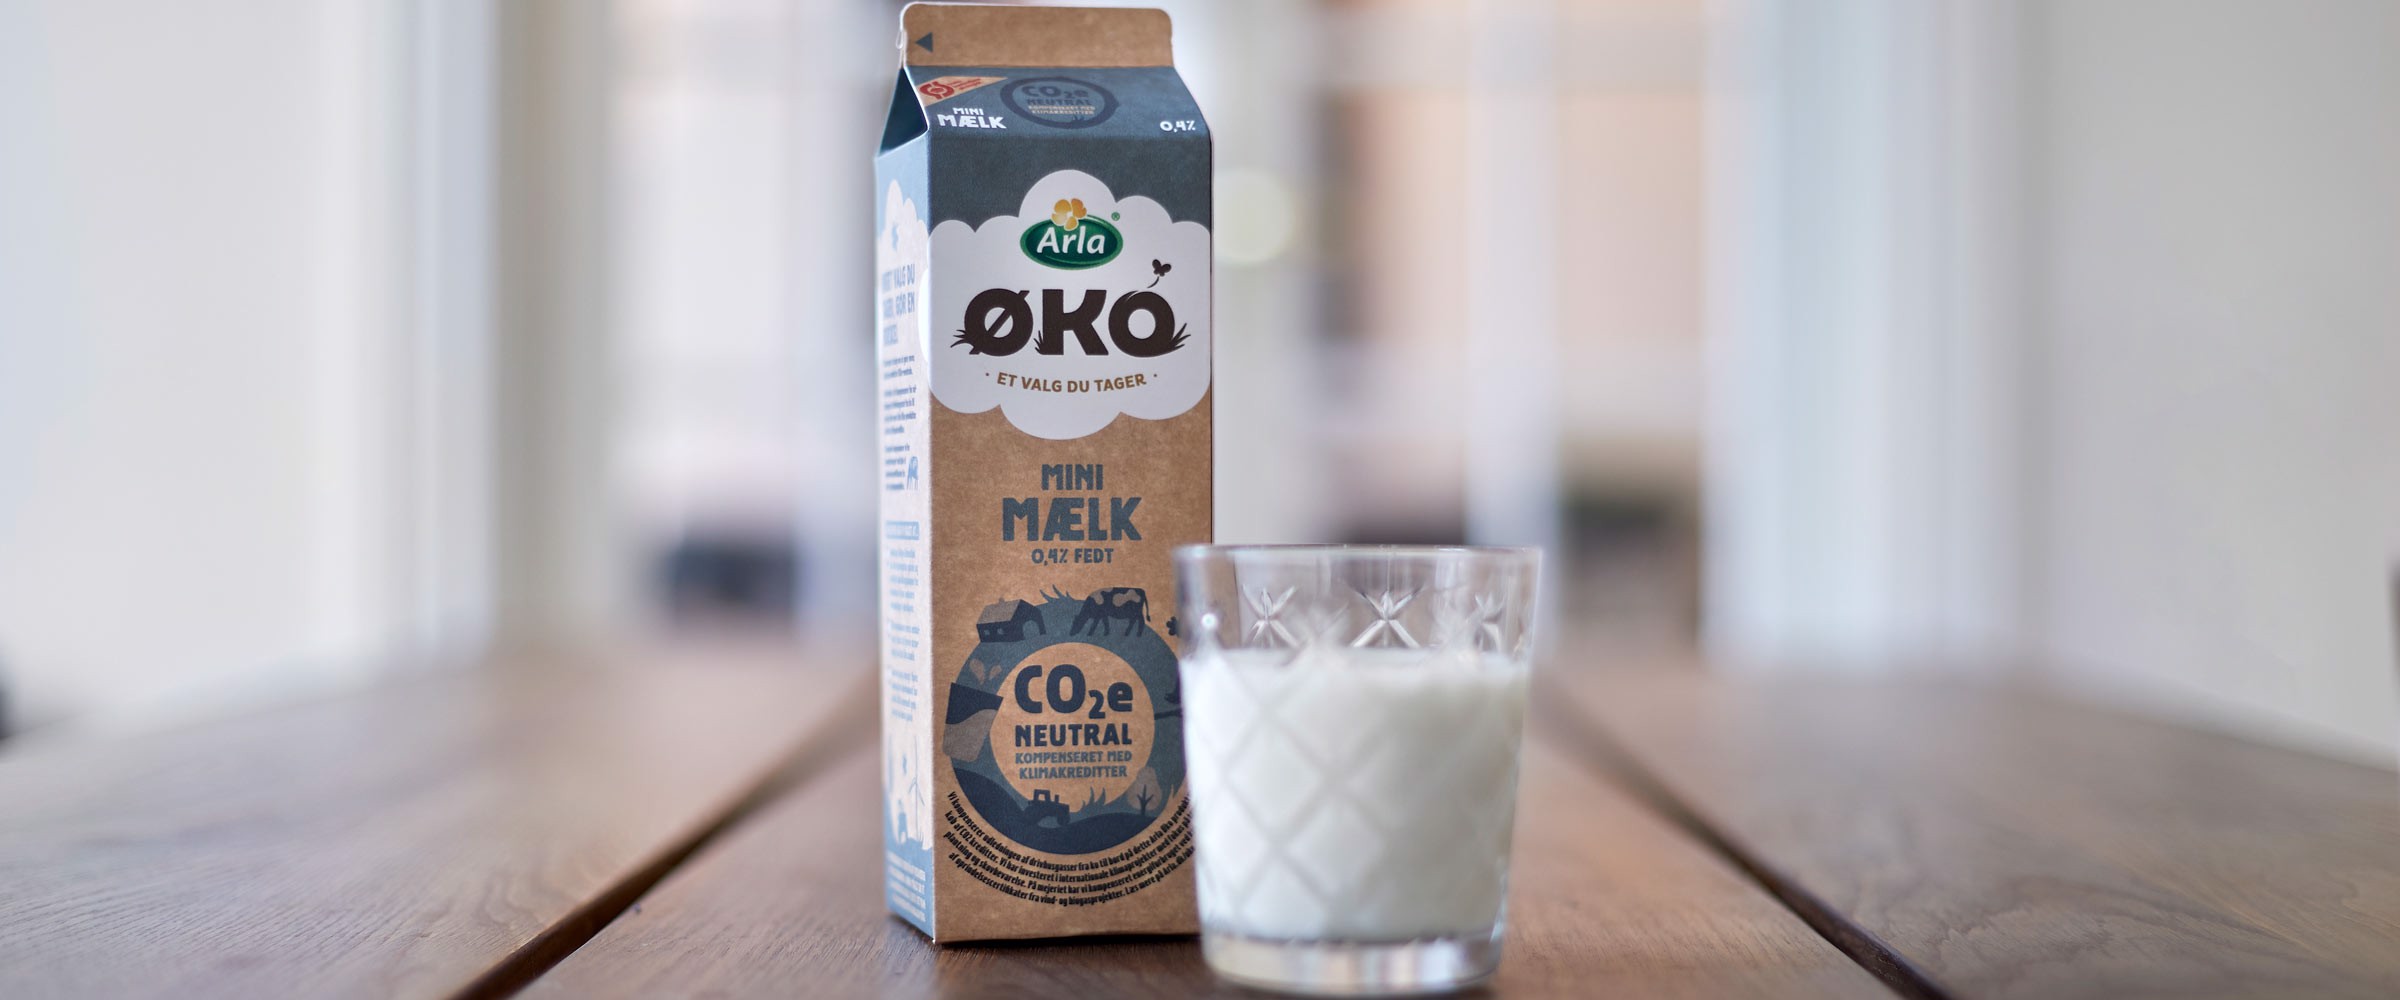 Kan mælk være CO2e neutral?